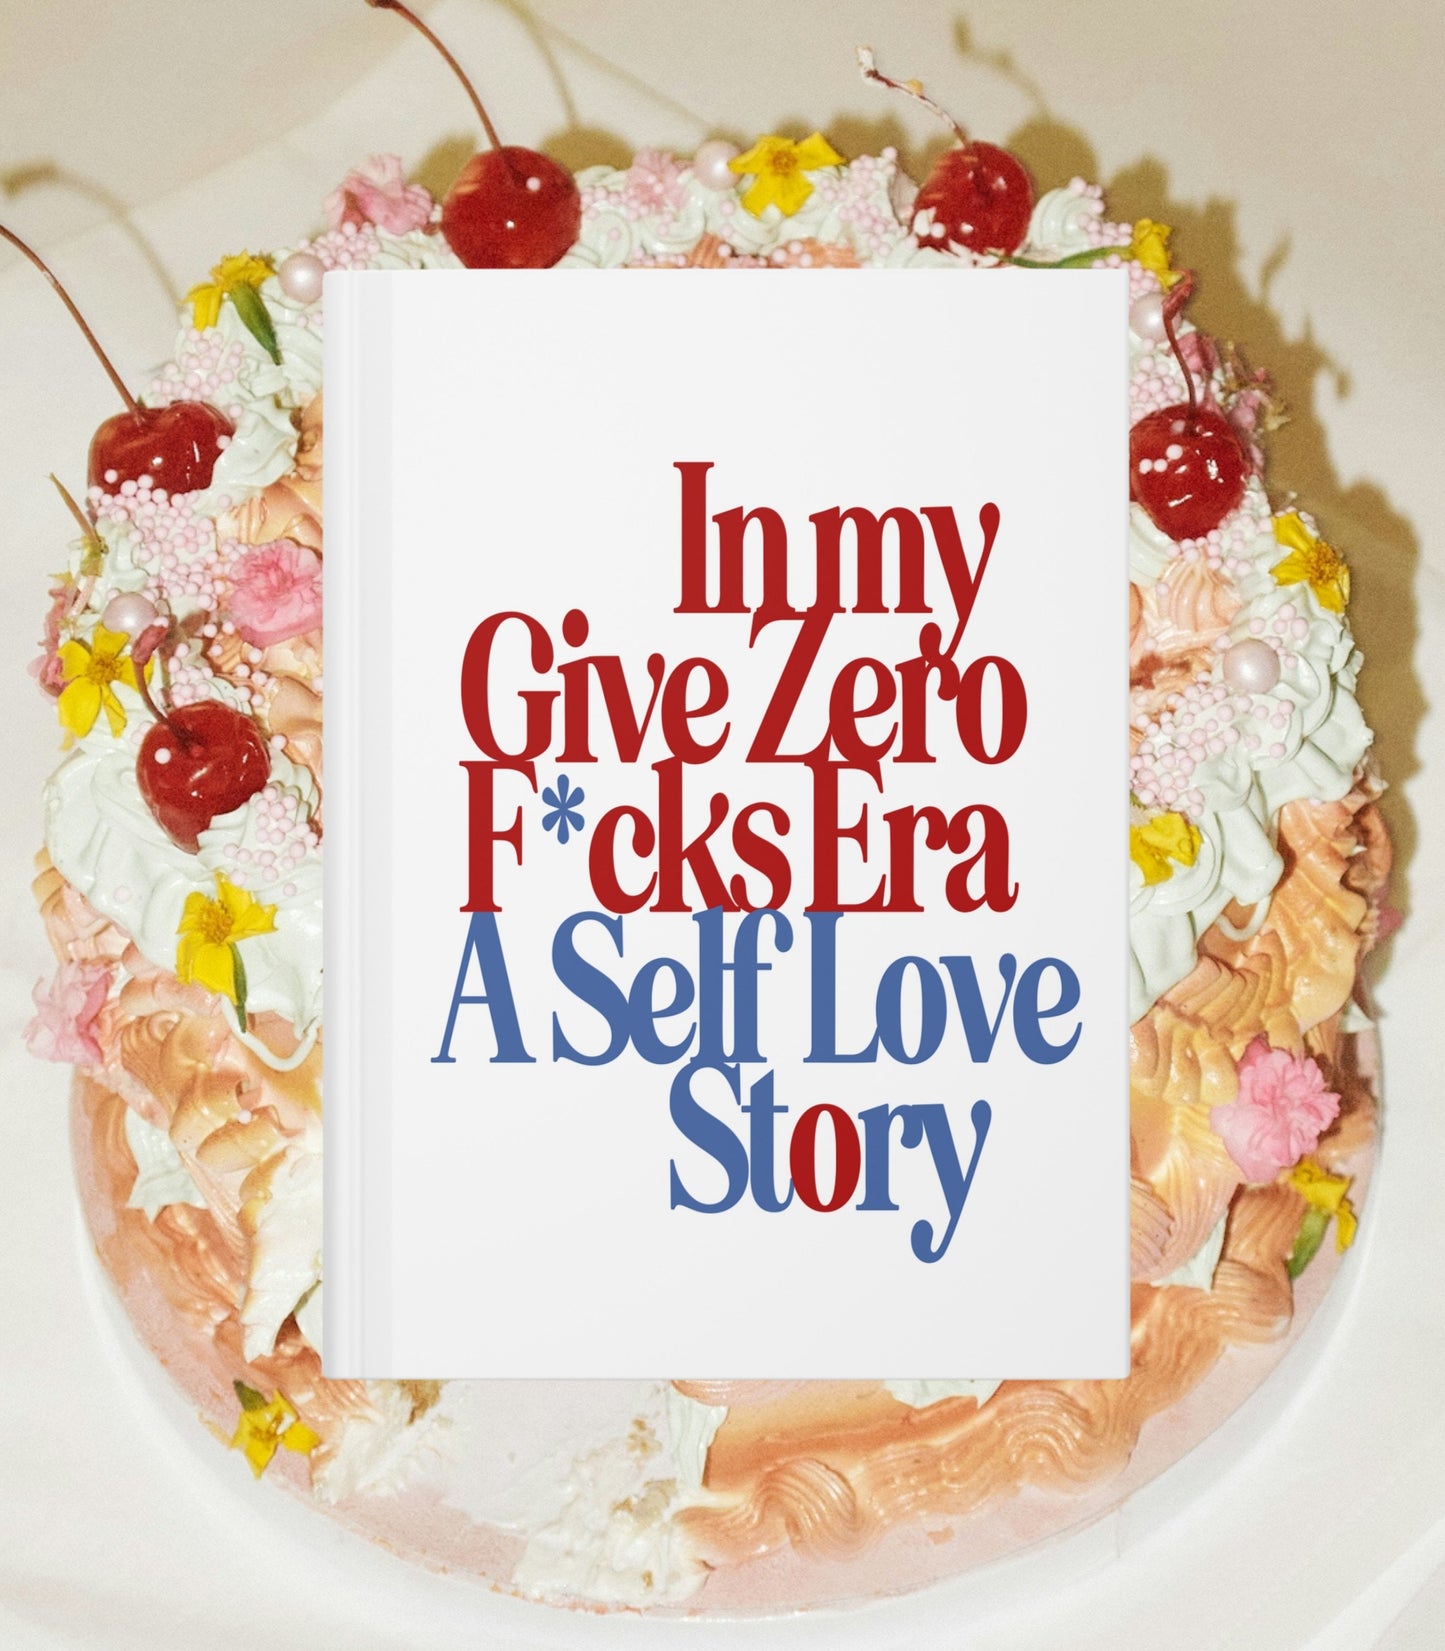 The "In My Give Zero F*cks Era - A Self-Love Story" Journal